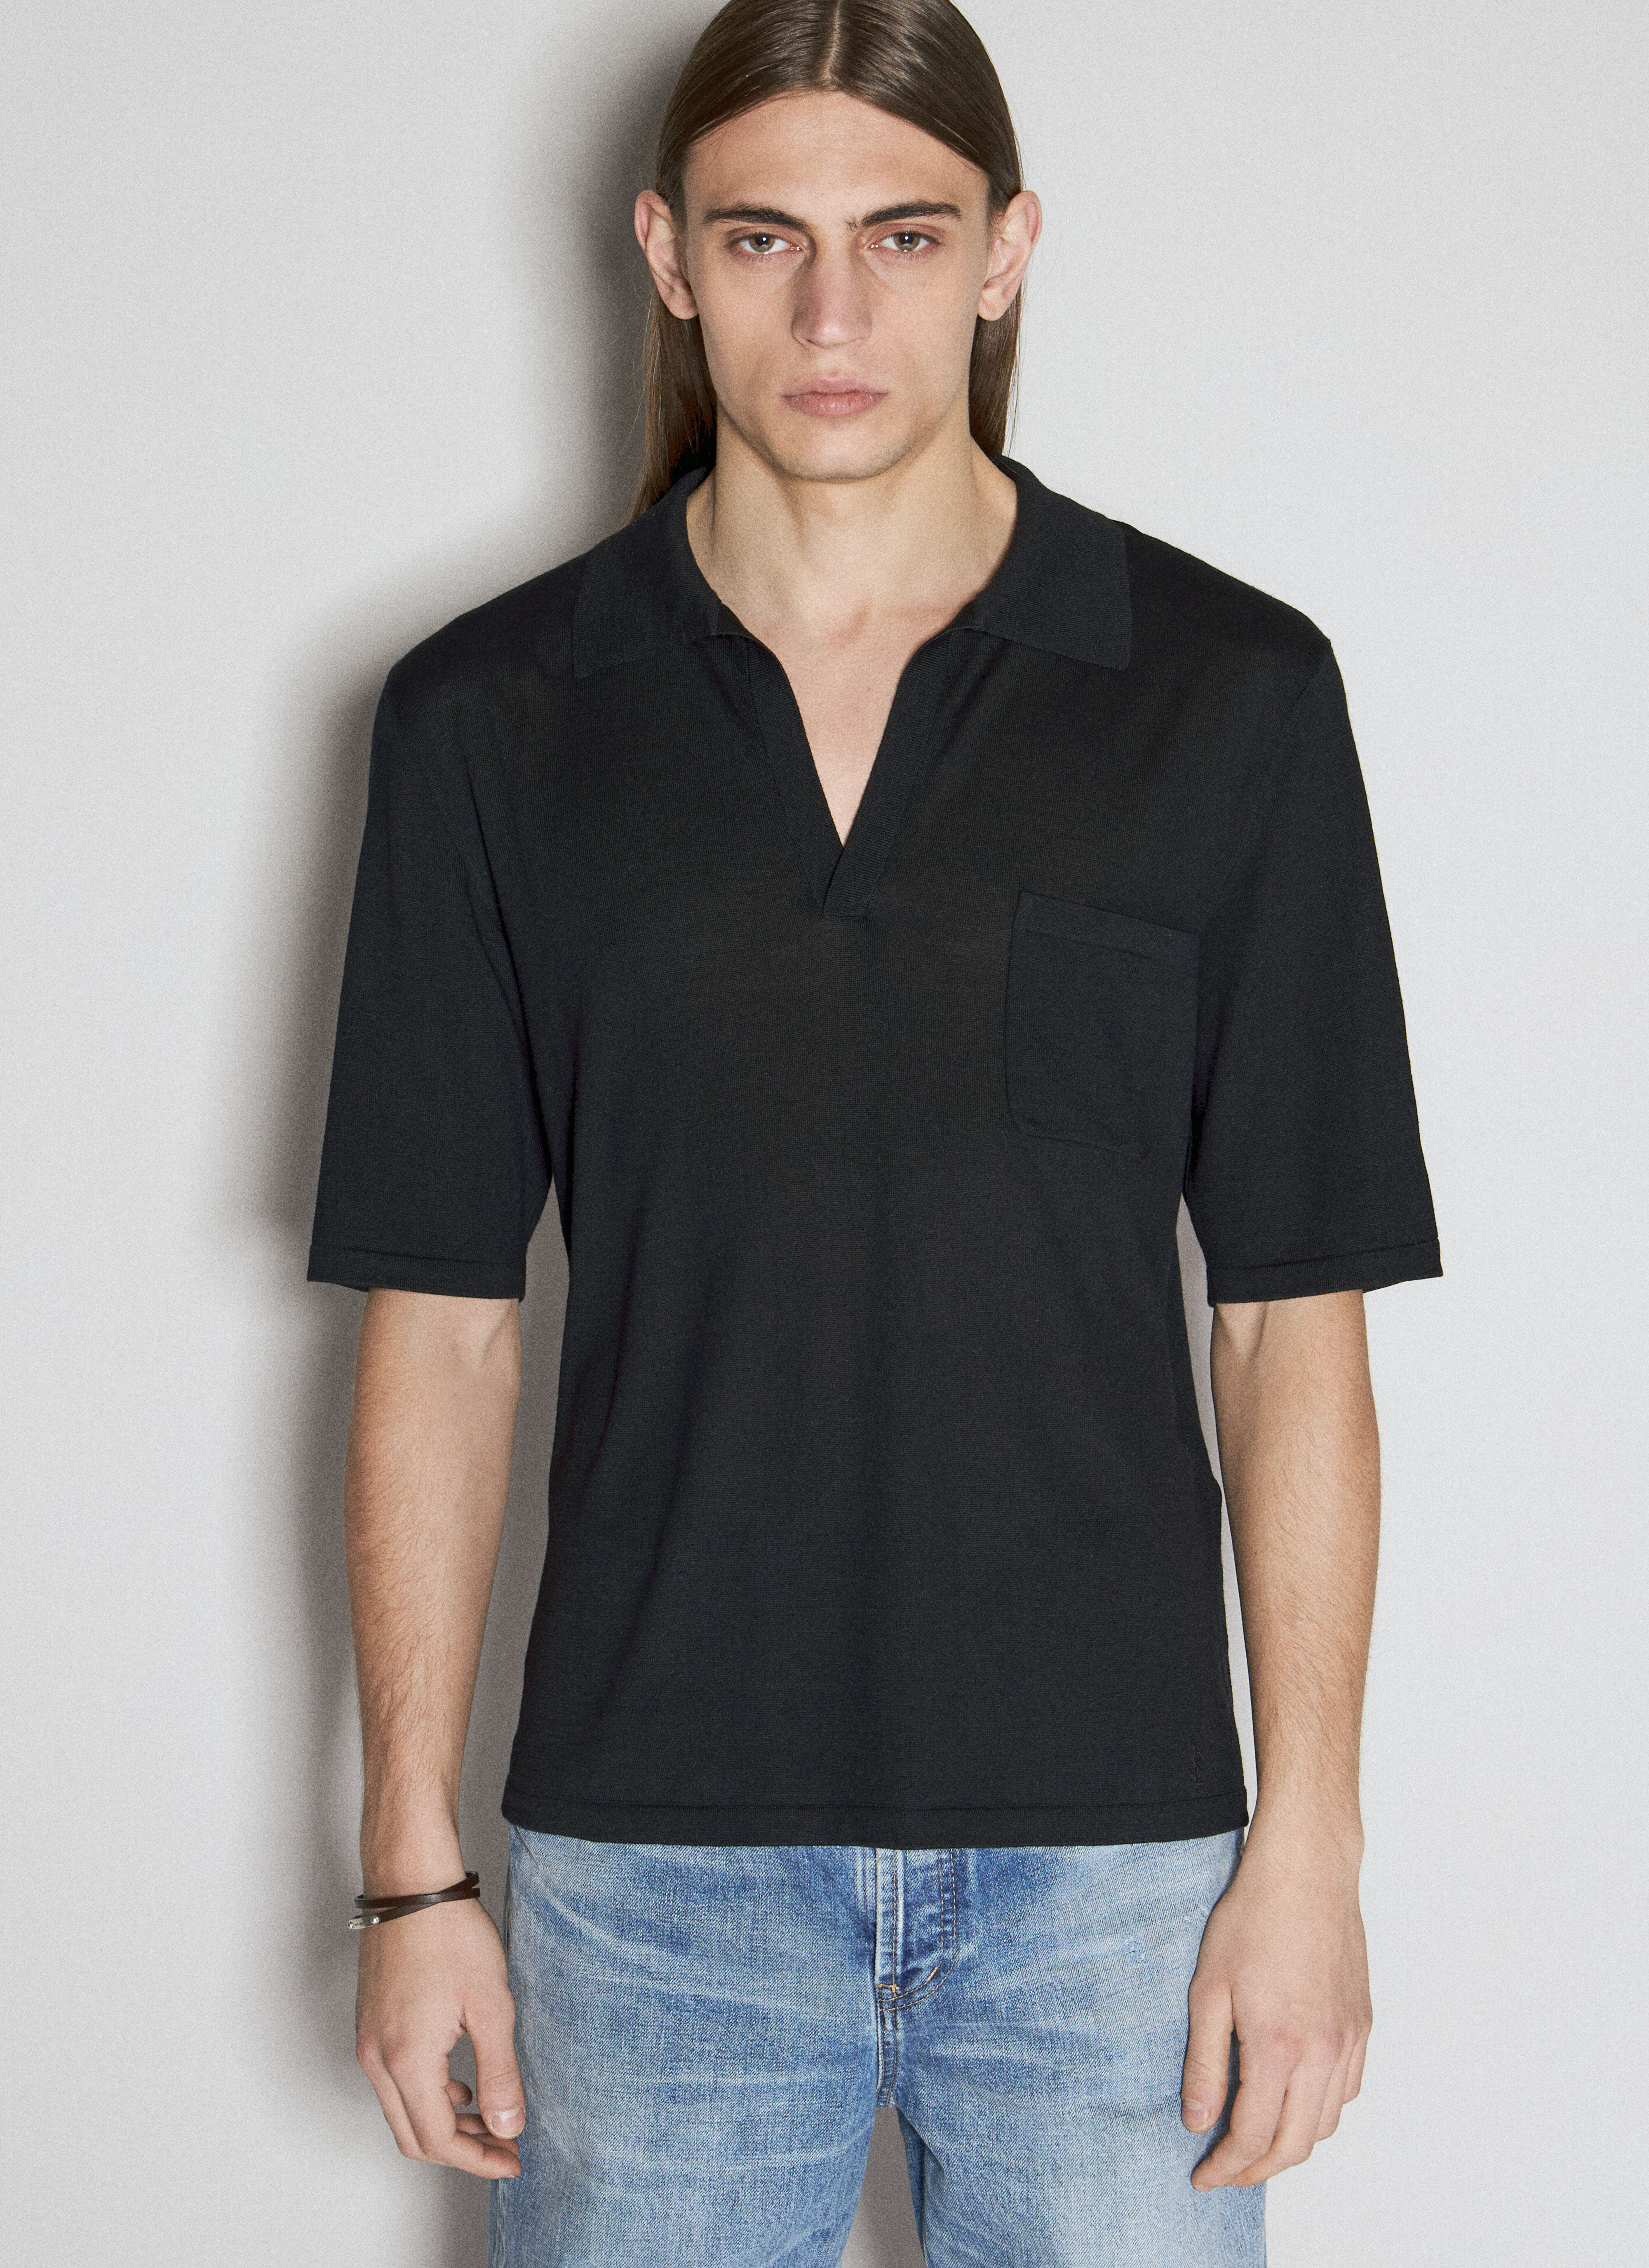 Saint Laurent Wool Knit Polo Shirt Black sla0256008